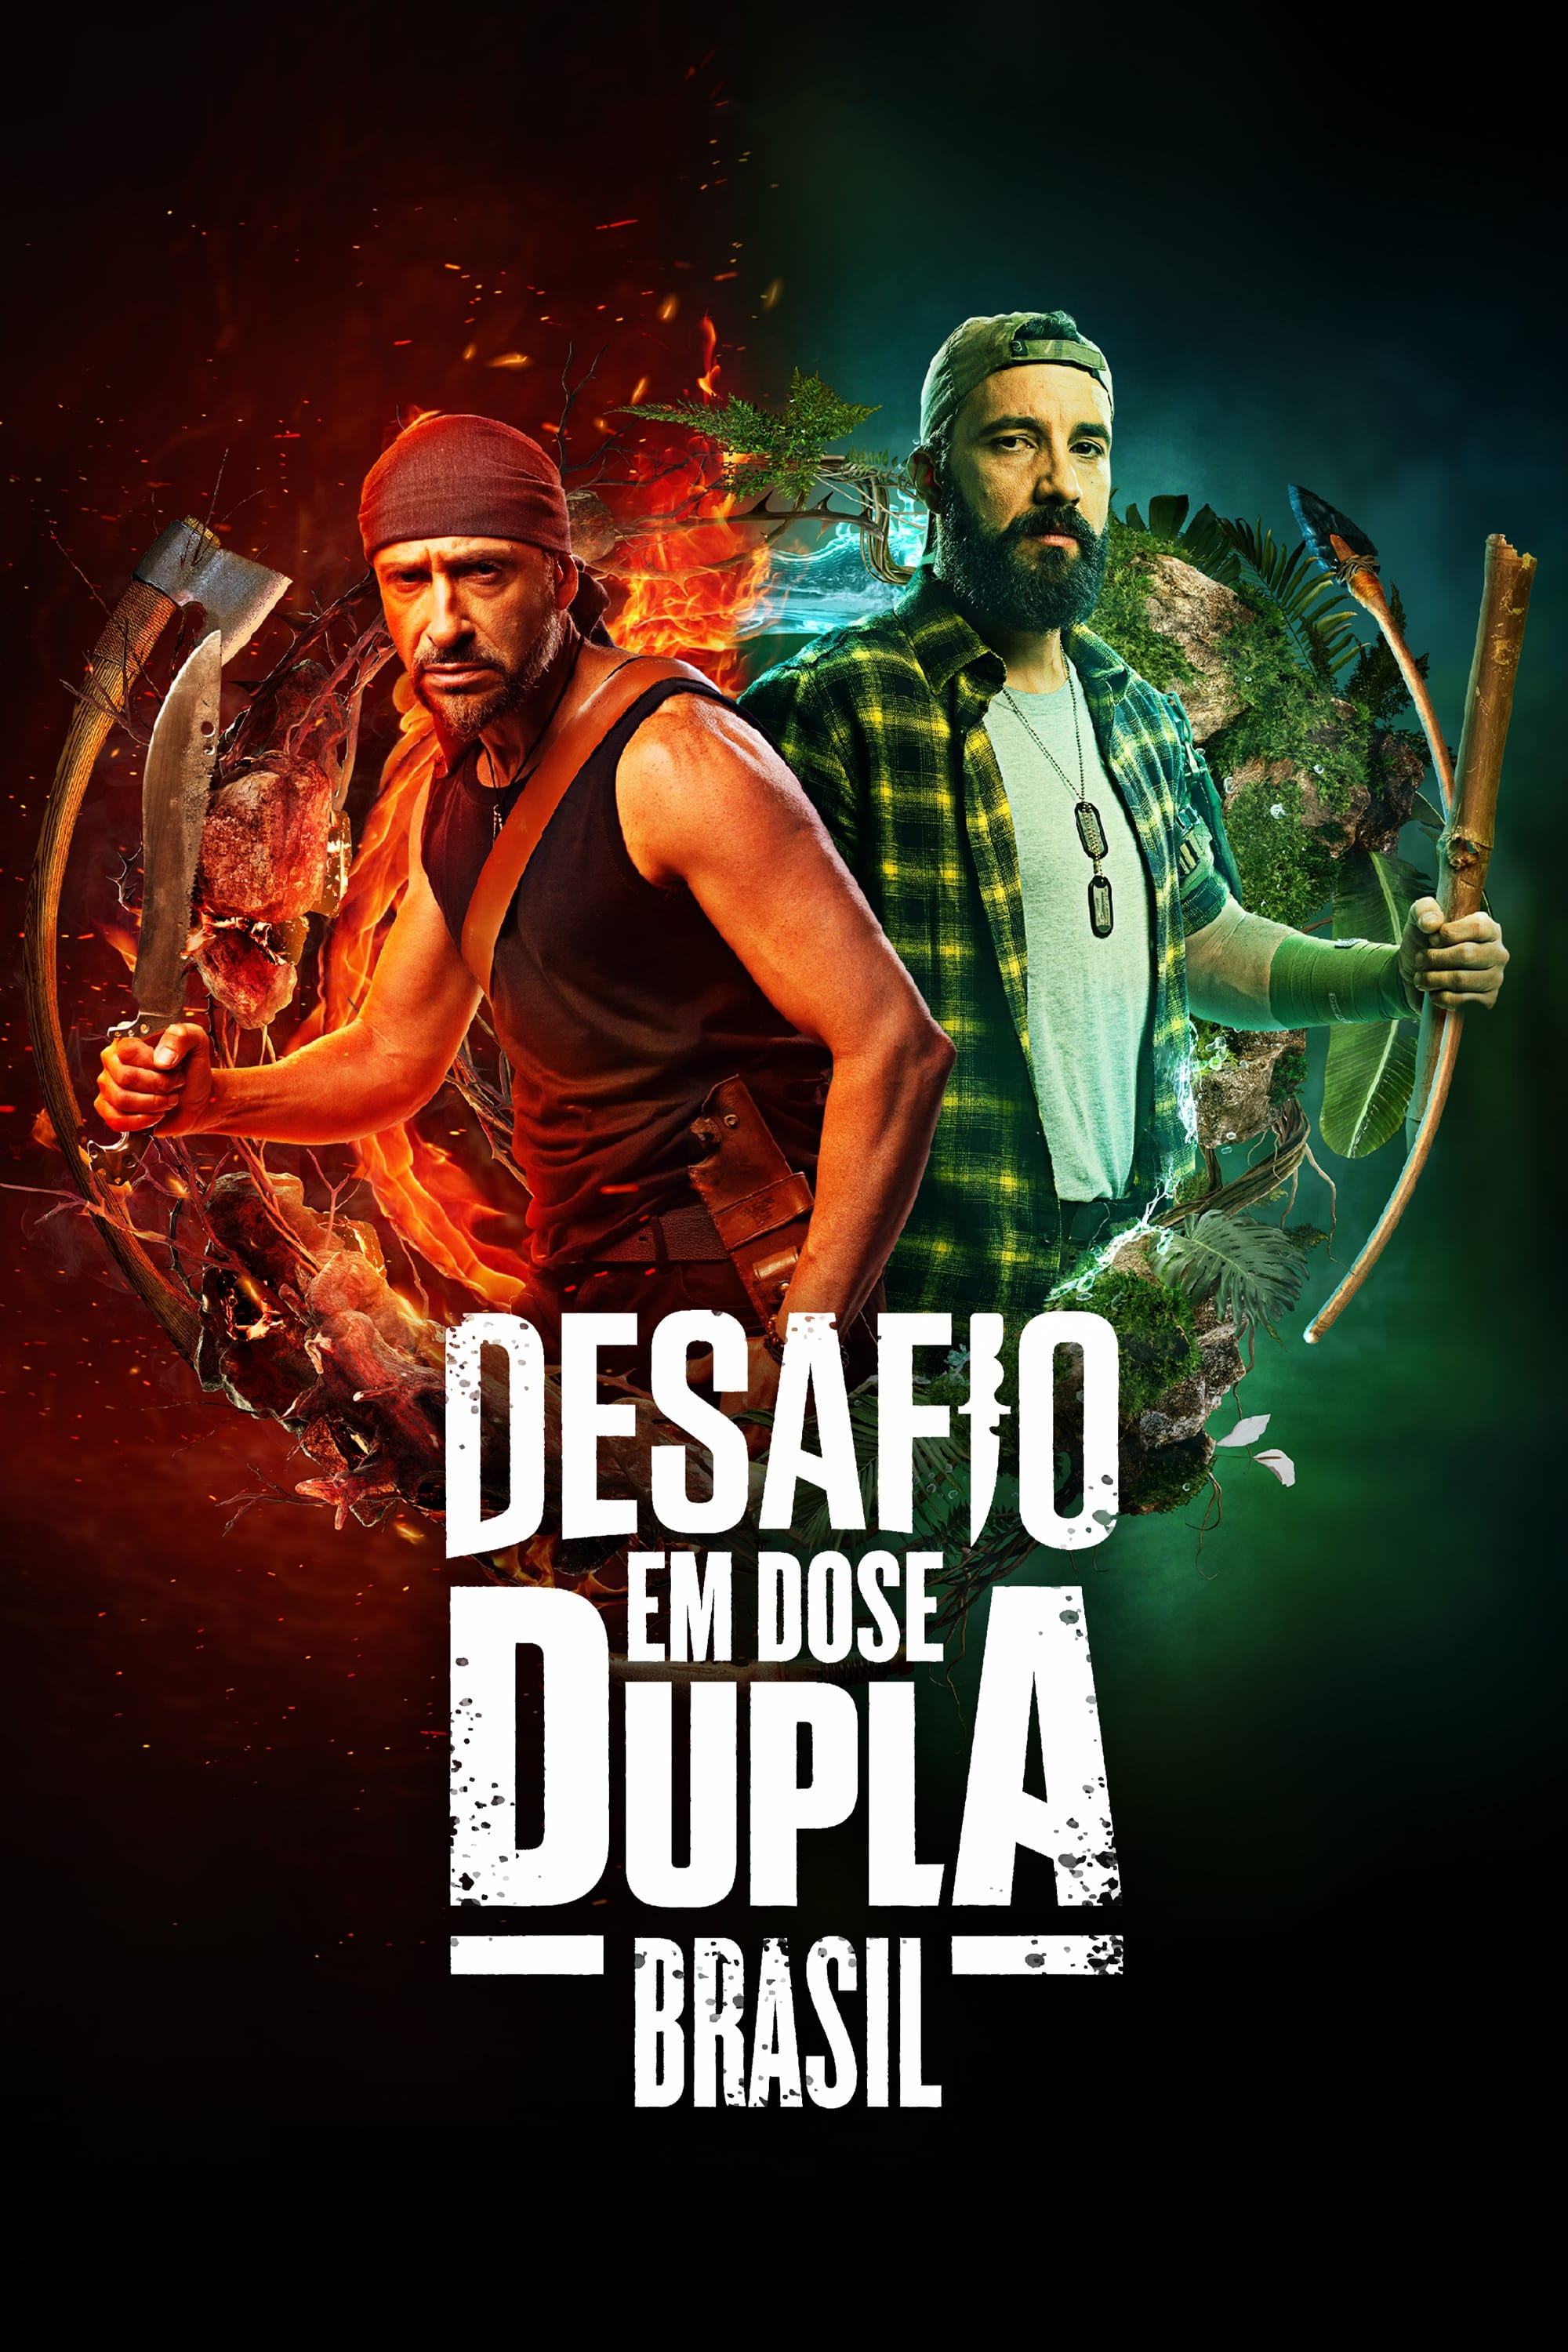 TV ratings for Dual Survival Brazil (Desafio Em Dose Dupla Brasil) in Argentina. Discovery+ TV series